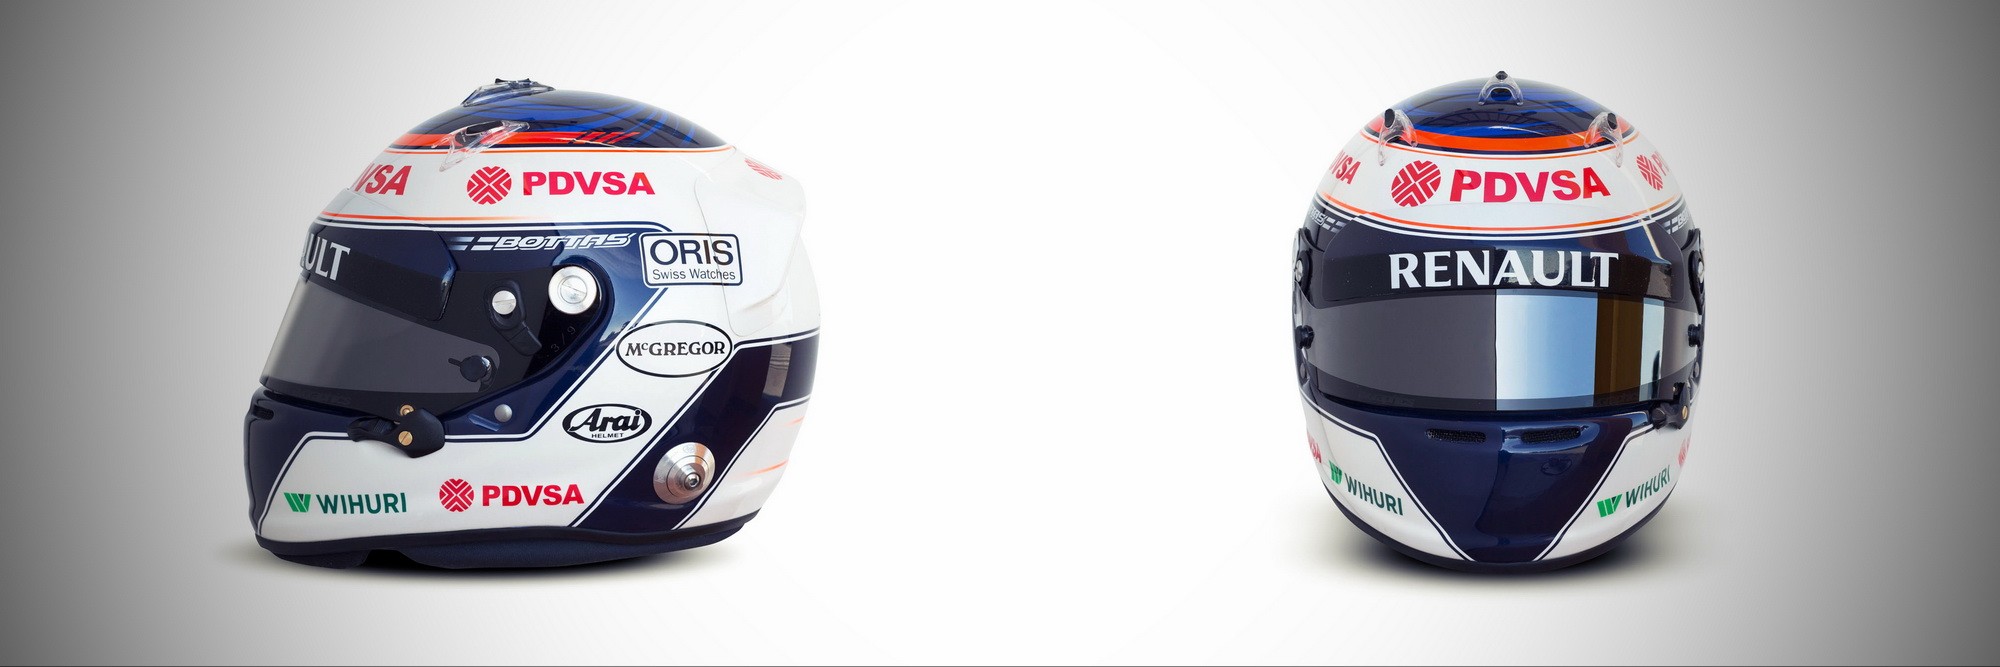 Шлем Валтерри Боттаса на сезон 2013 года | 2013 helmet of Valtteri Bottas